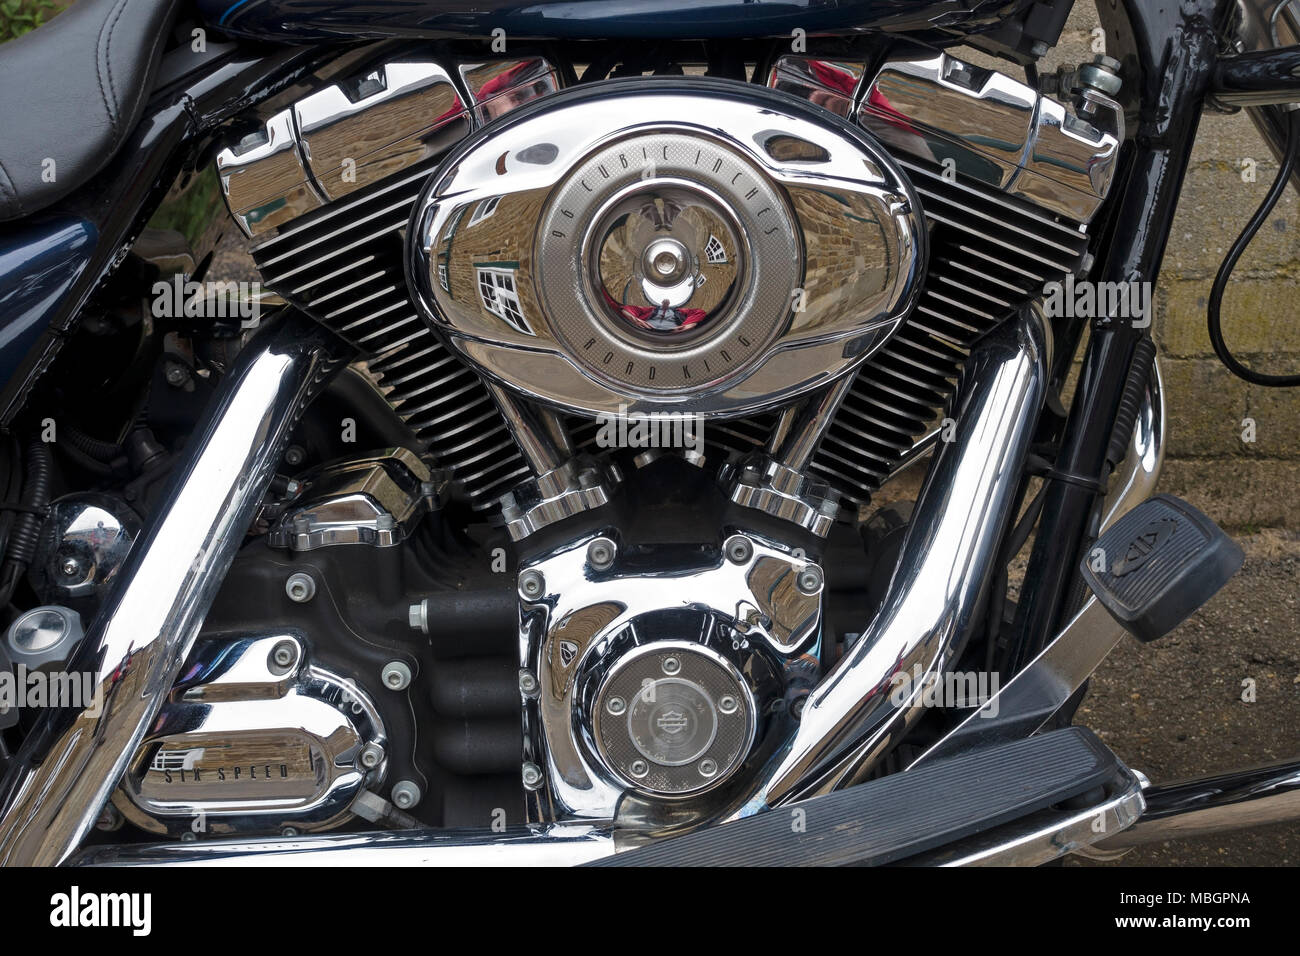 Harley Davidson 96 pouces cubes V twin cam moto Road King twin engine Banque D'Images